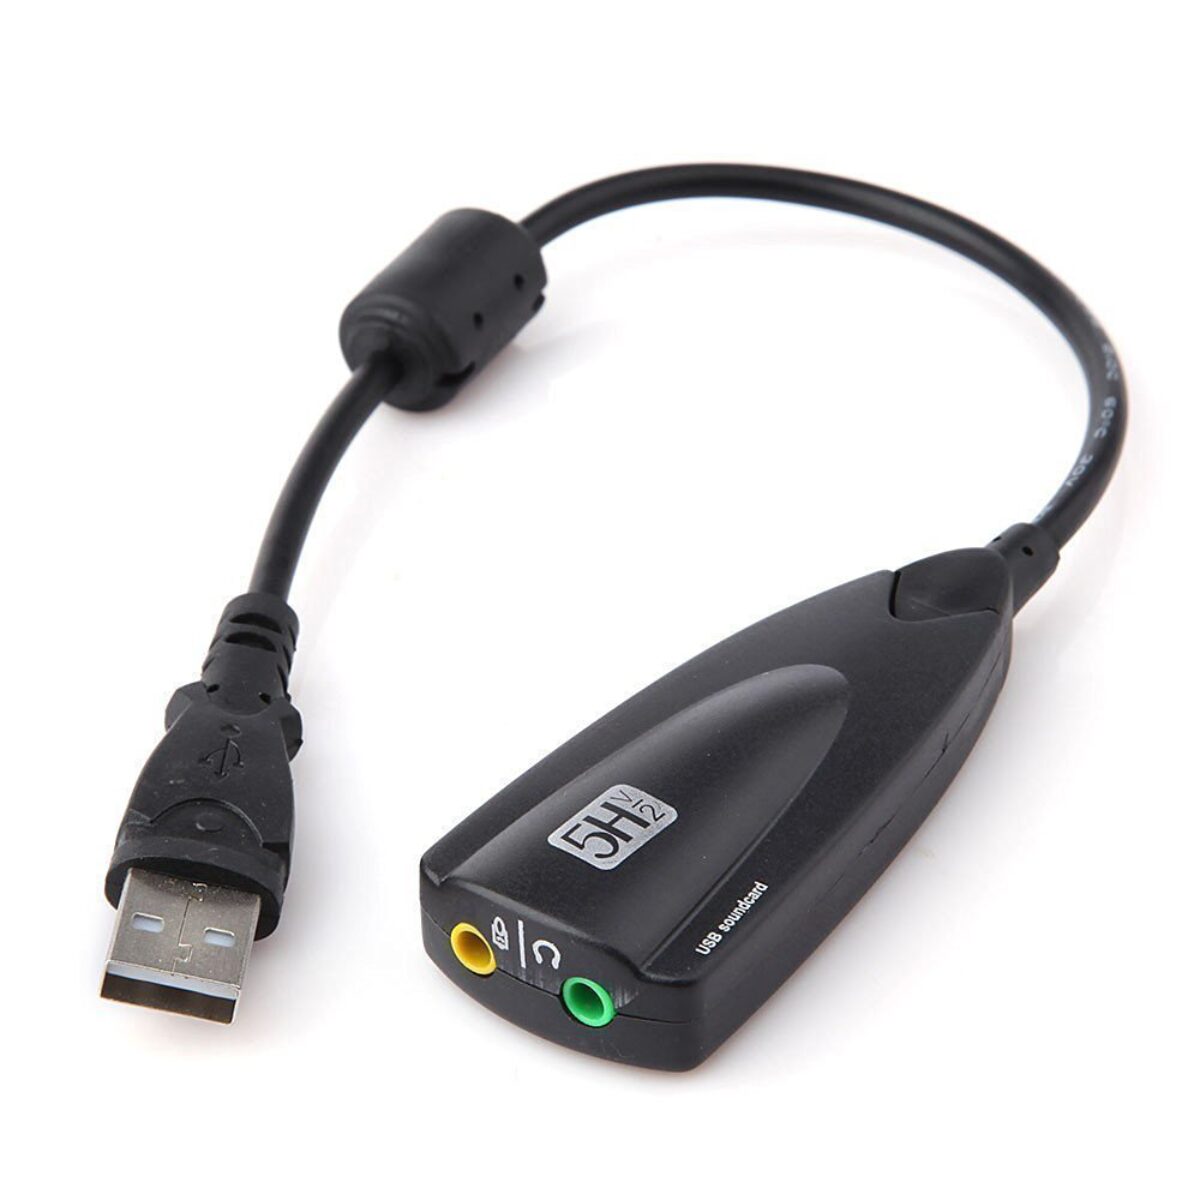 5Hv2 USB Adapter with headphone & premium quality